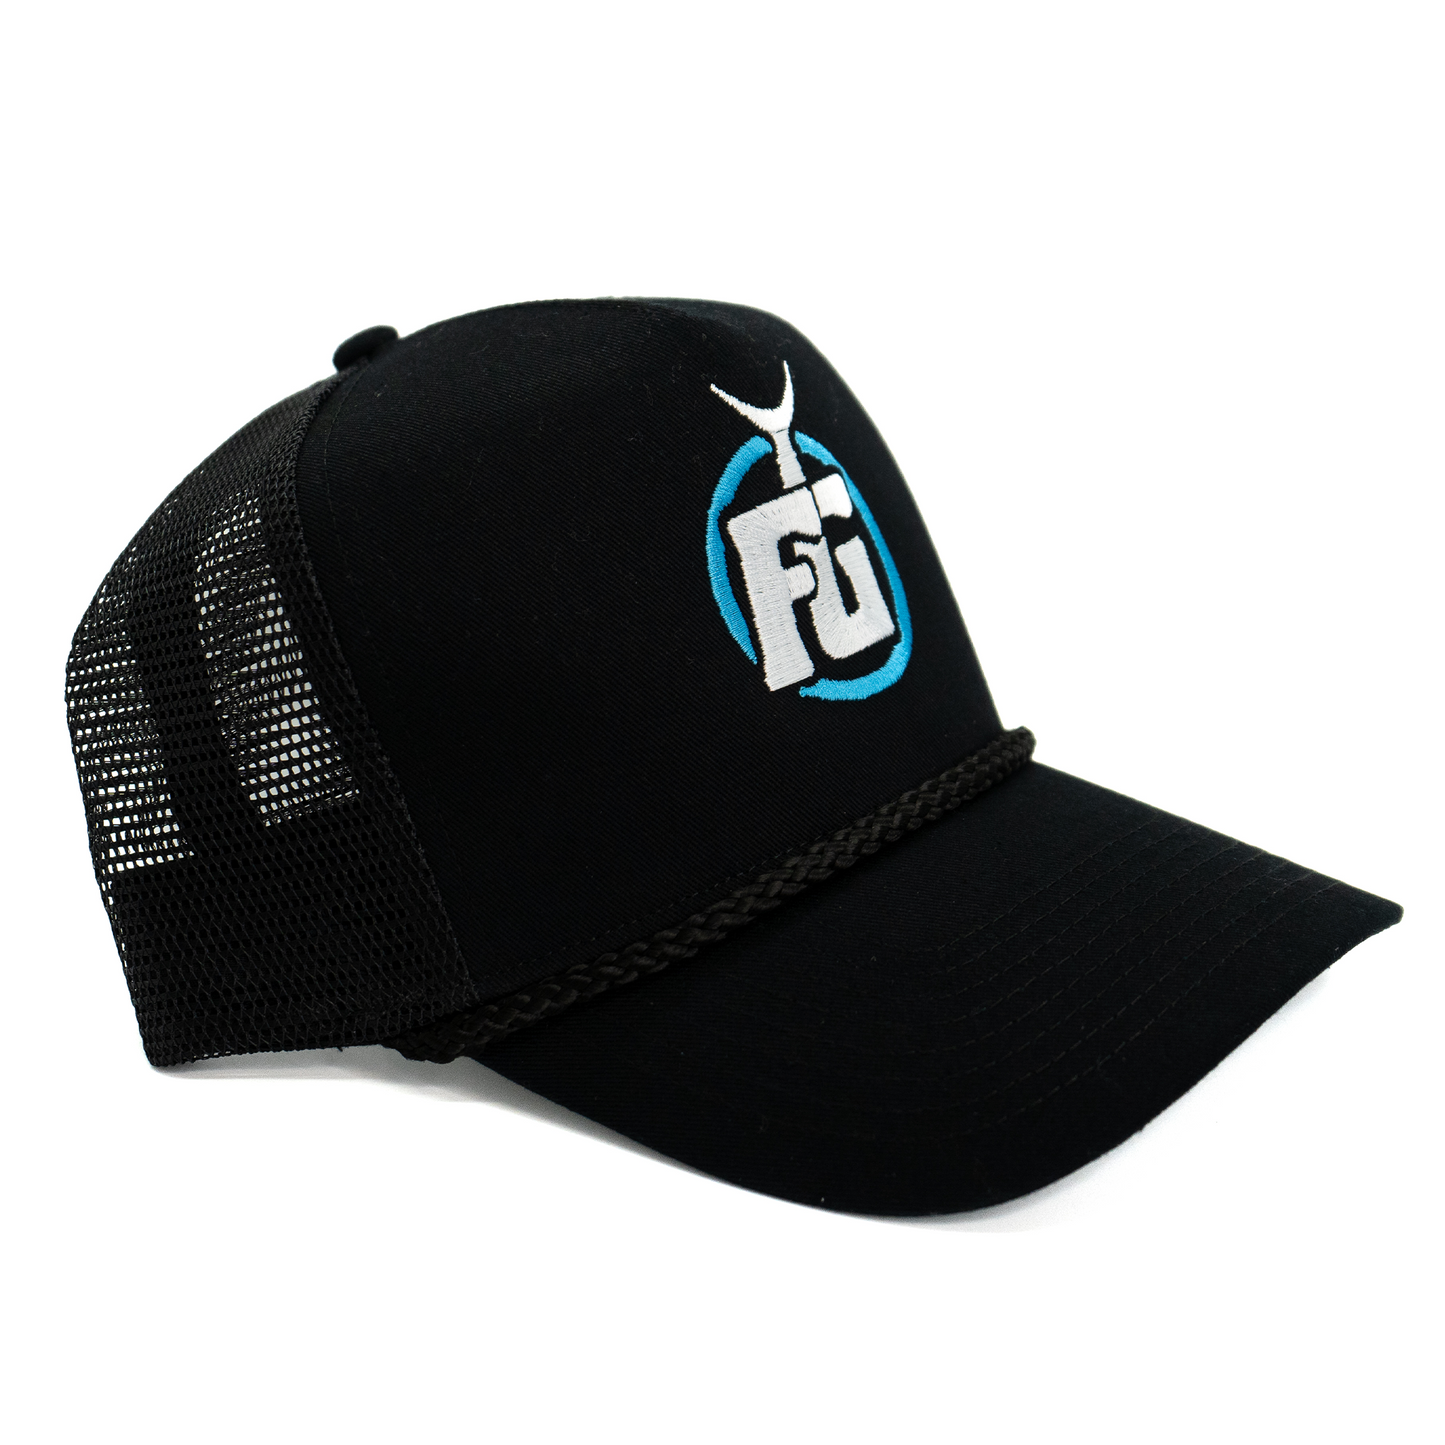 FG Trucker Hat